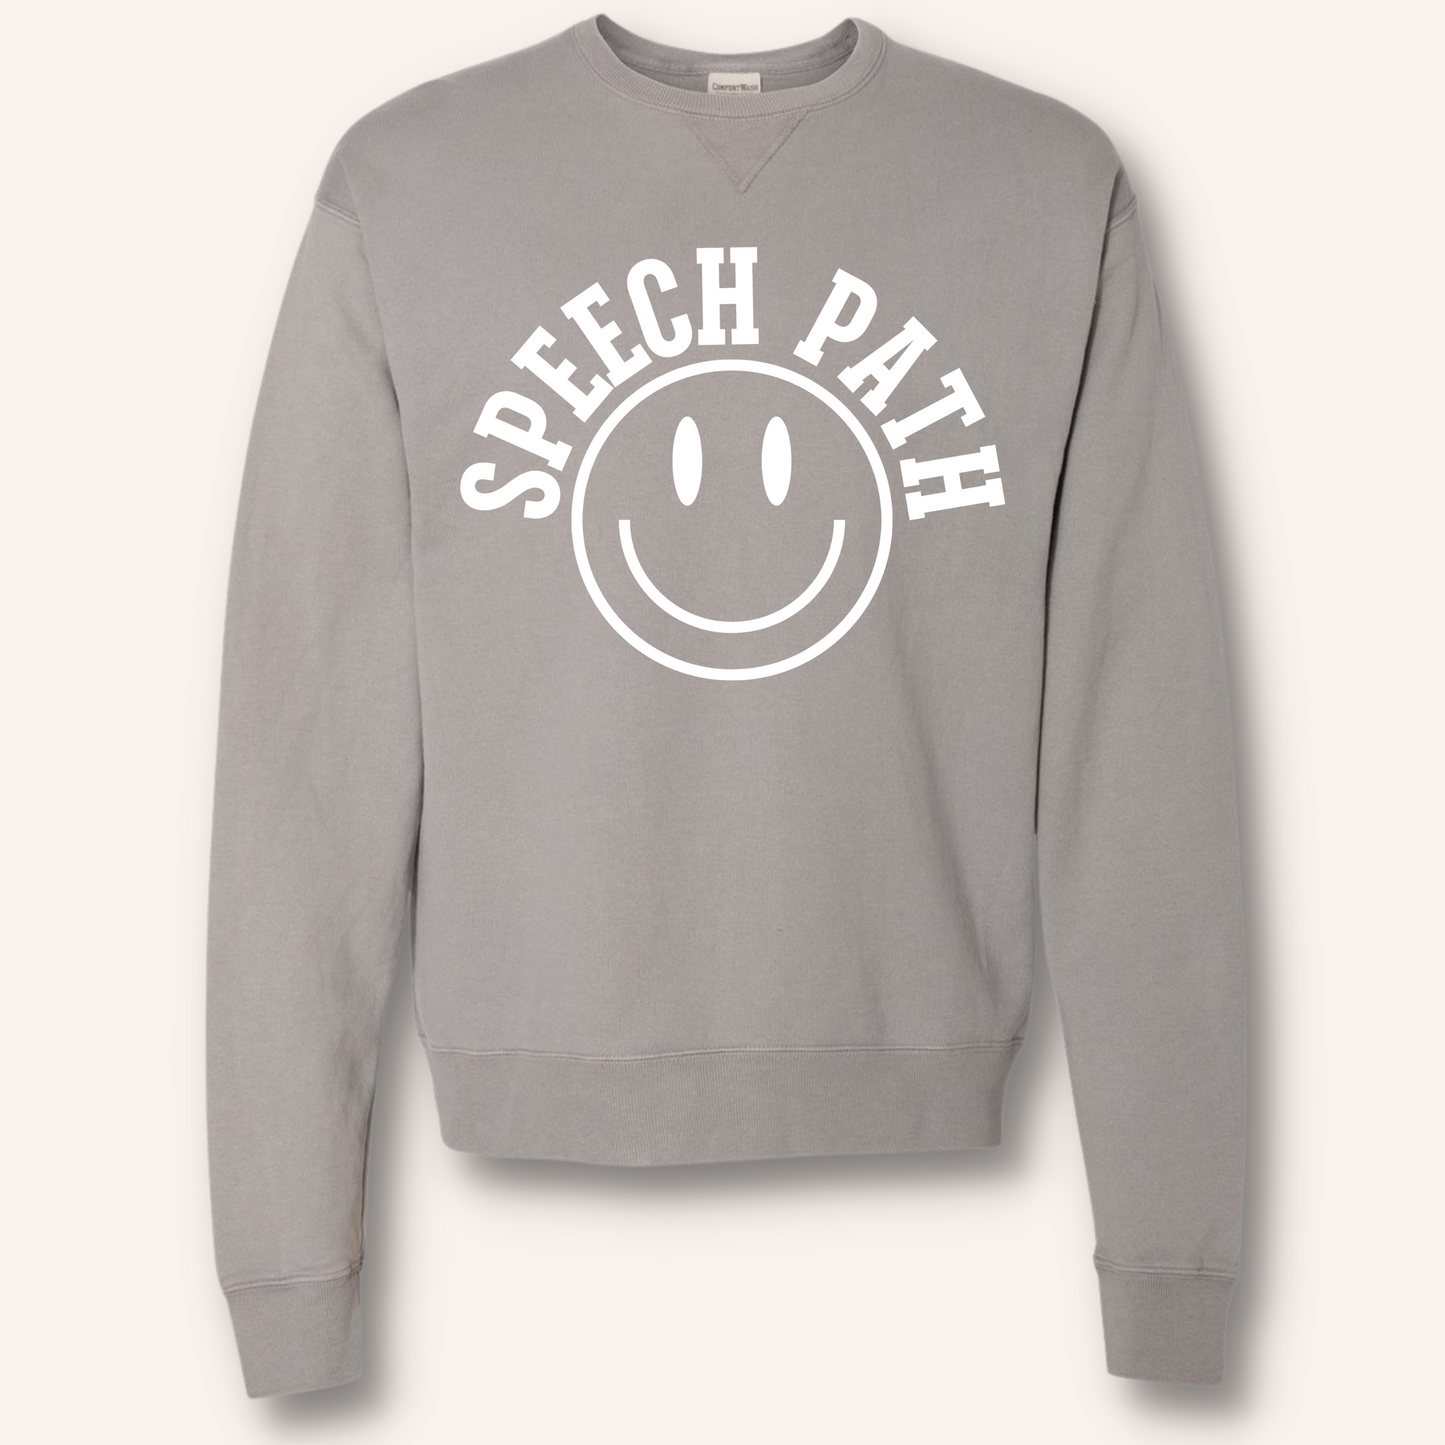 Speech Path Premium Crewneck Sweatshirt